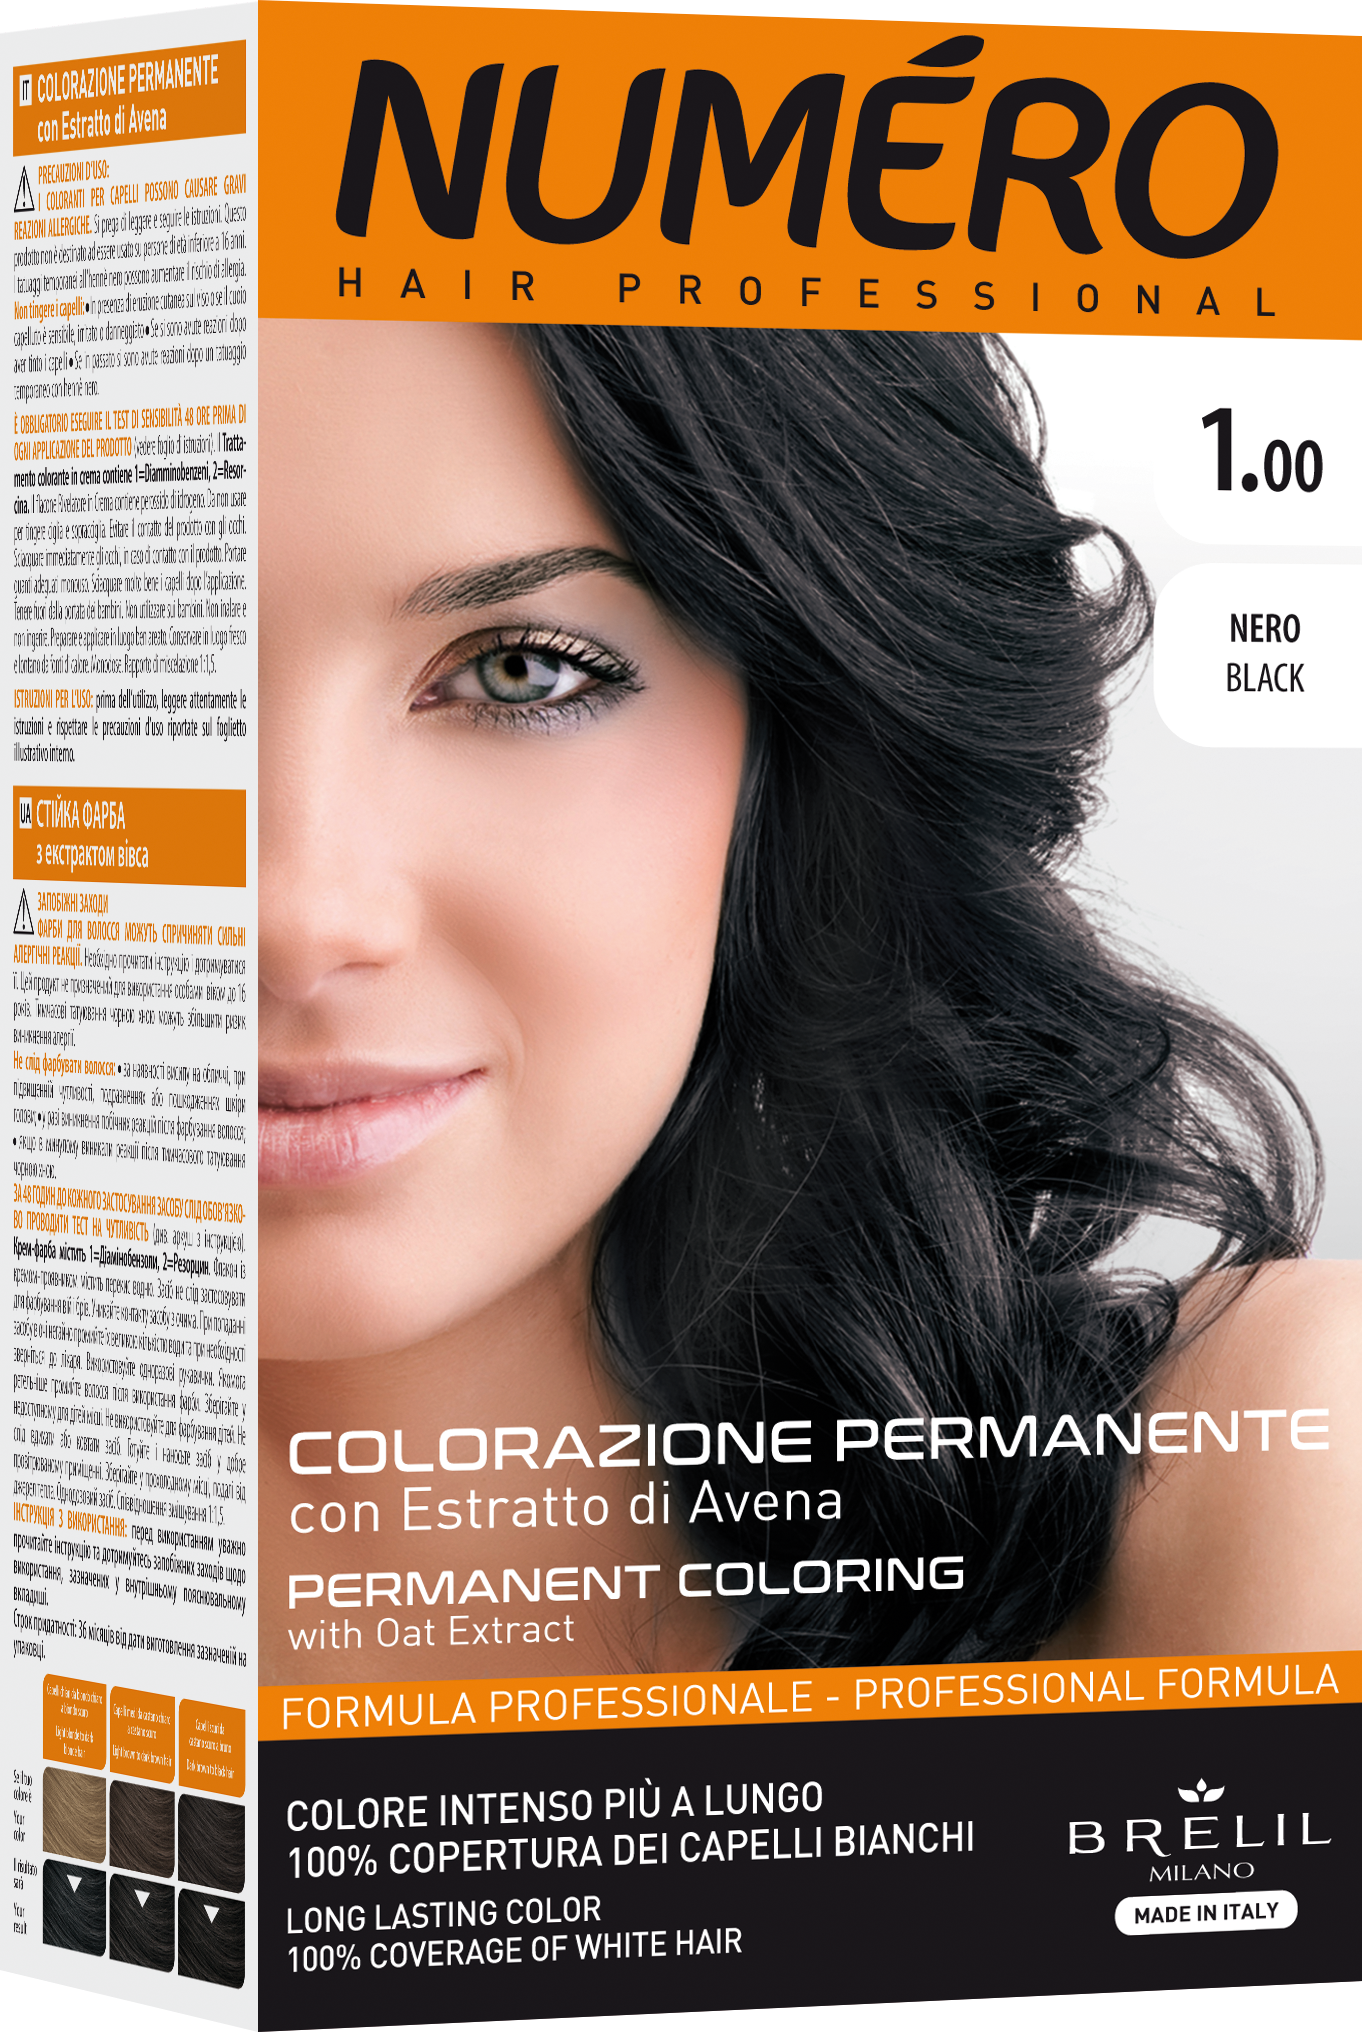 Краска для волос Numero Hair Professional Black, тон 1.00 (Черный), 140 мл - фото 1